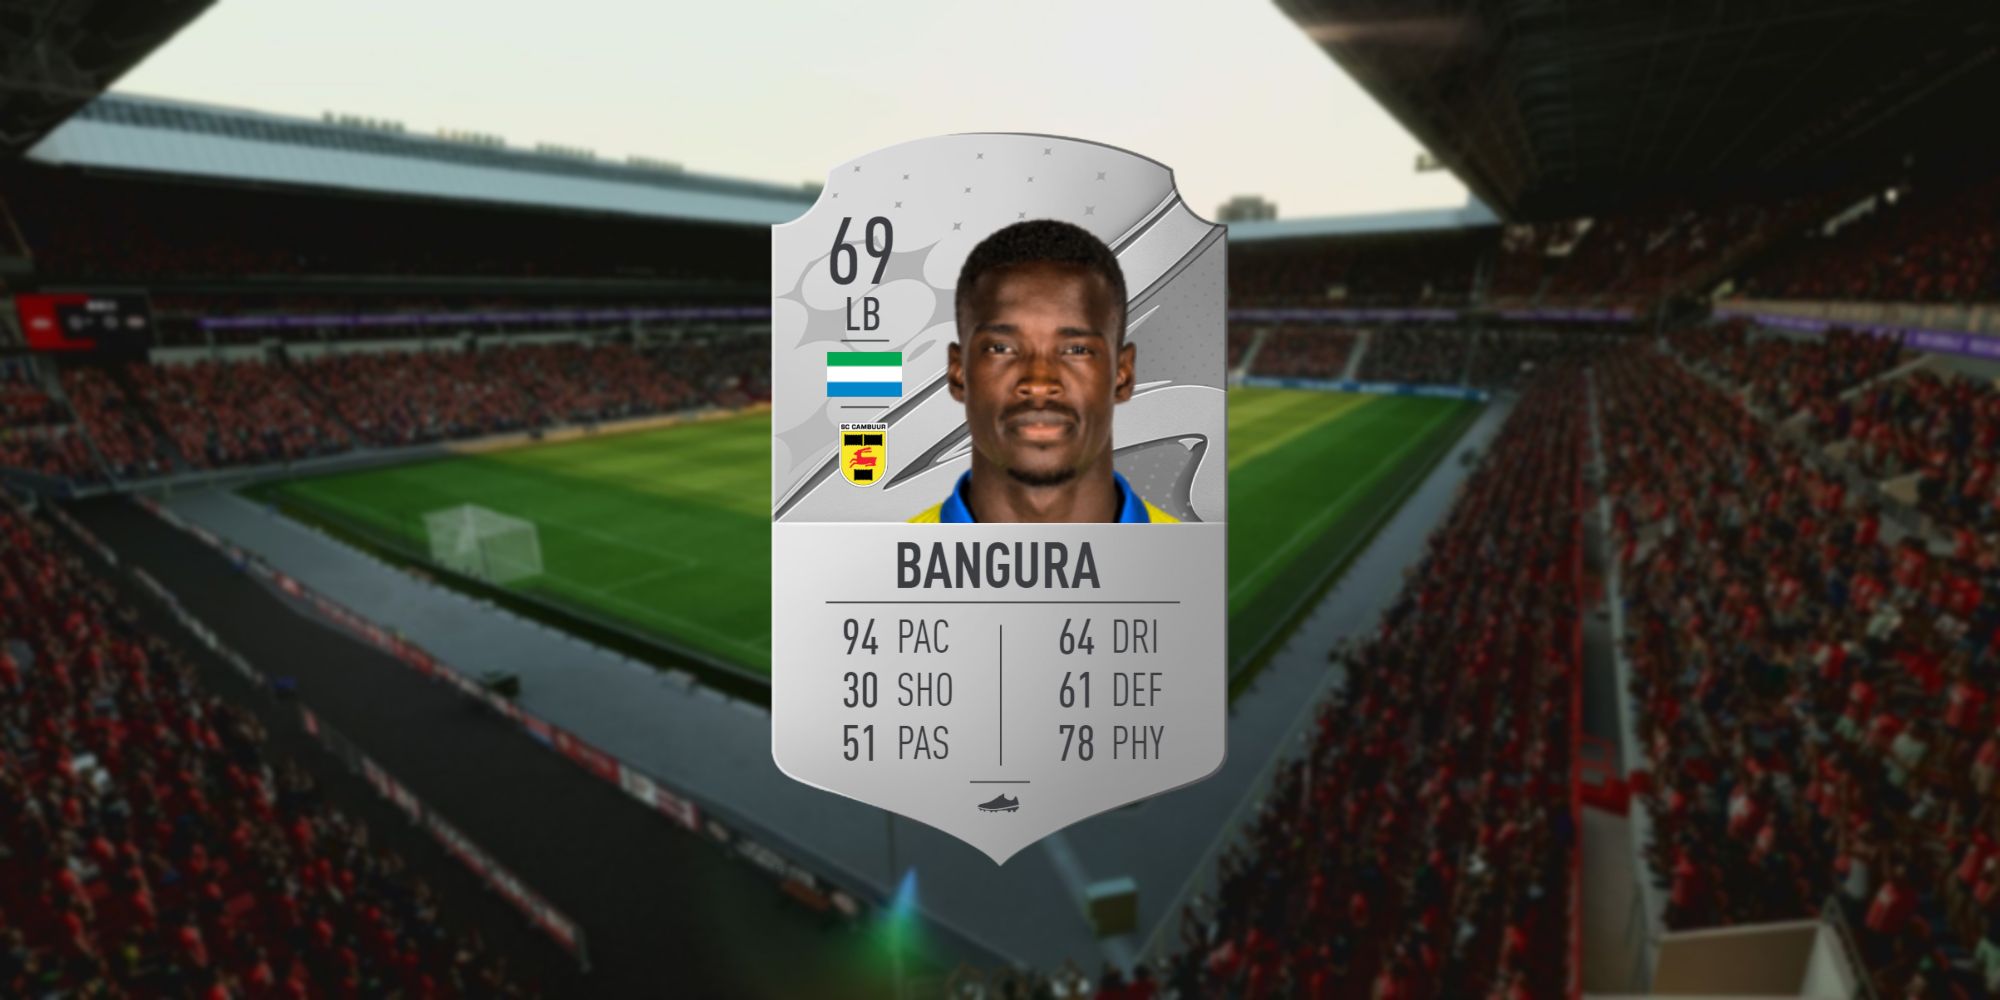 An image of Alex Bangura's FIFA 23 Card